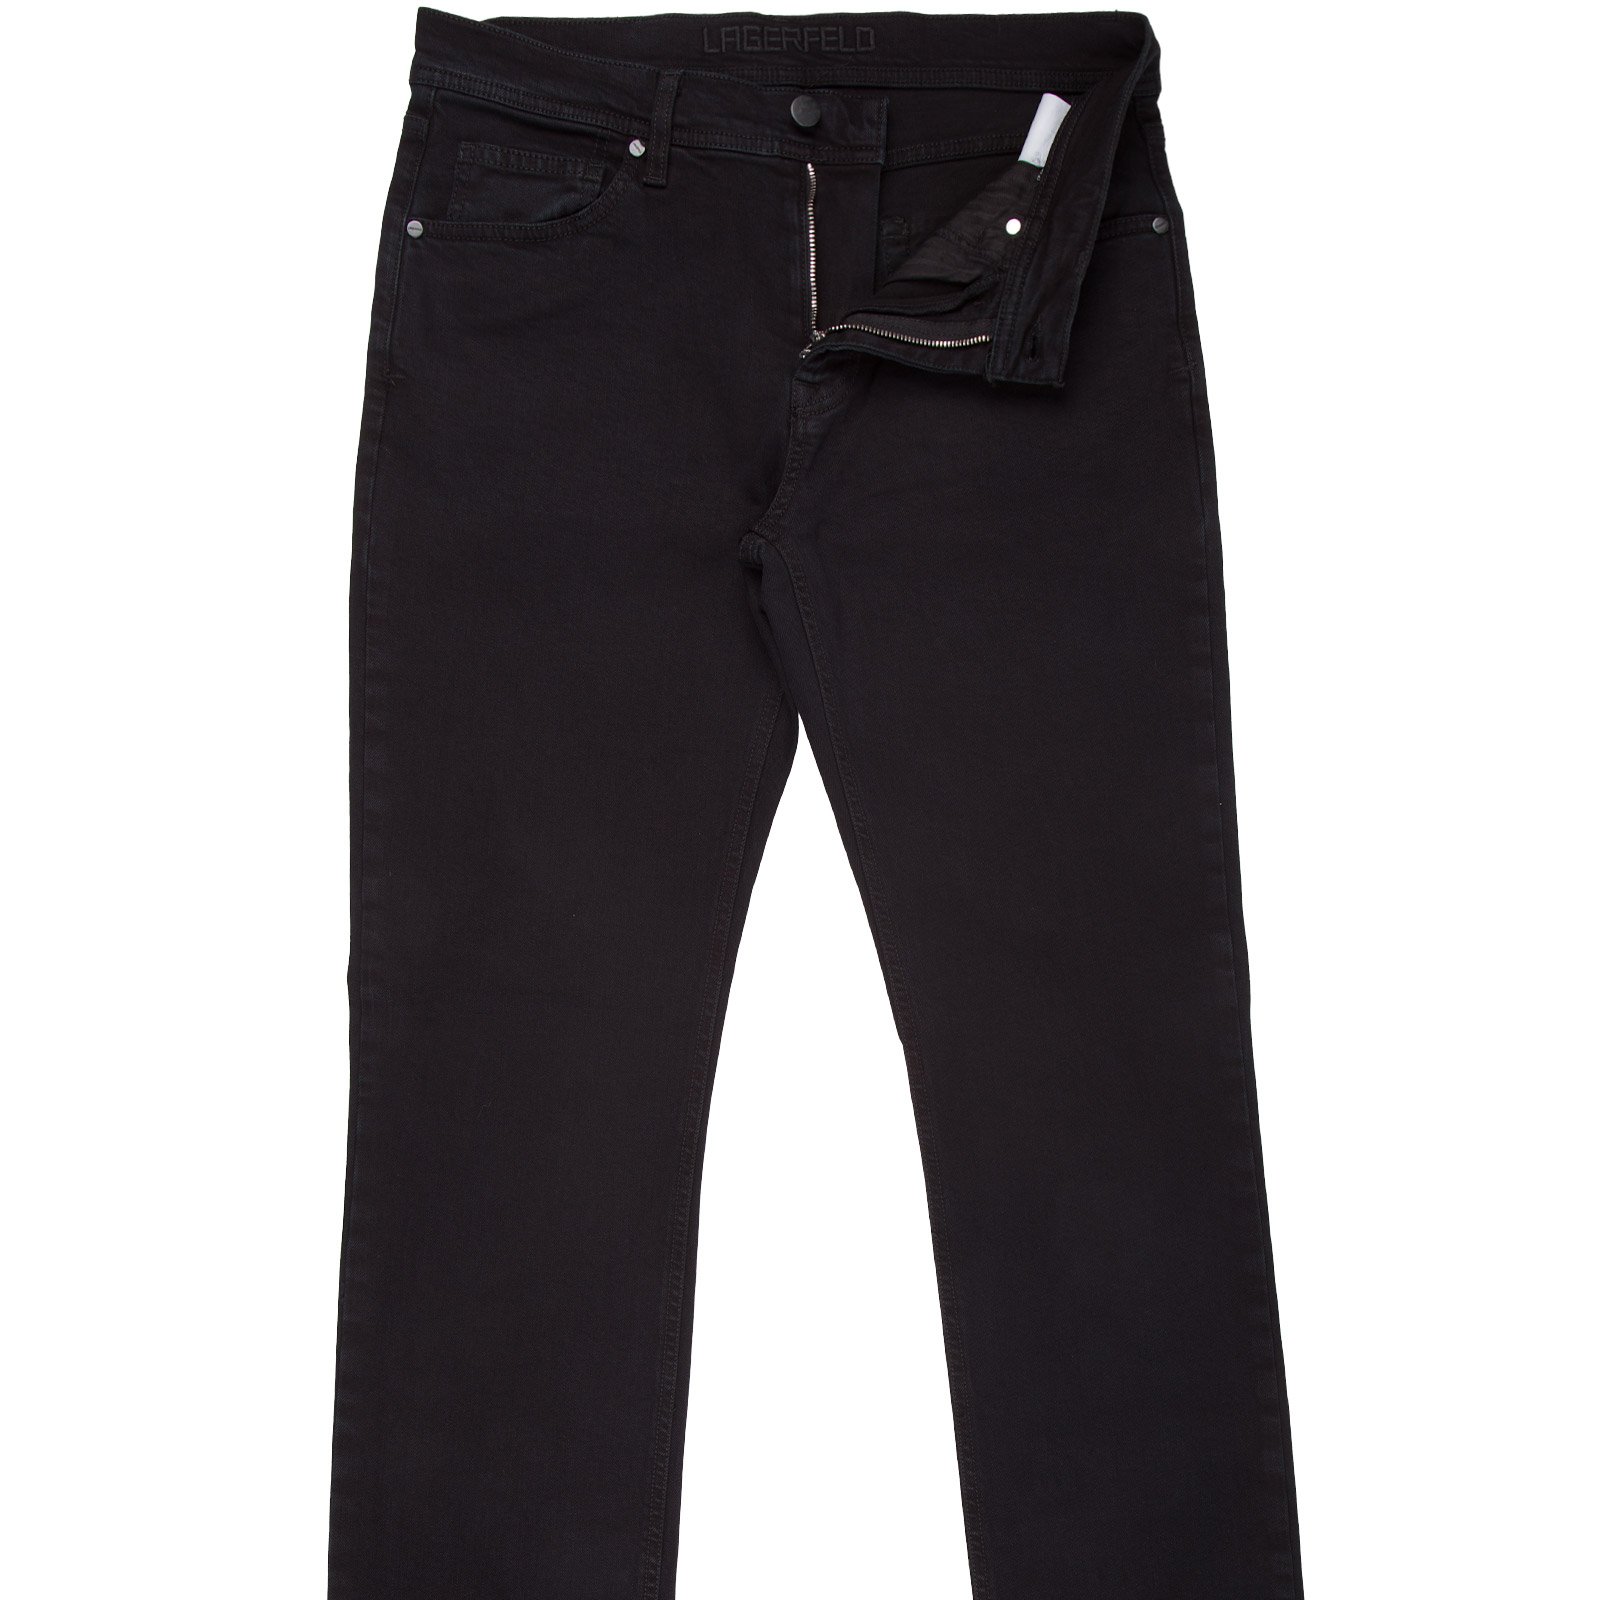 Luxury Stretch Black Denim Jeans - New Online : Fifth Avenue Menswear ...